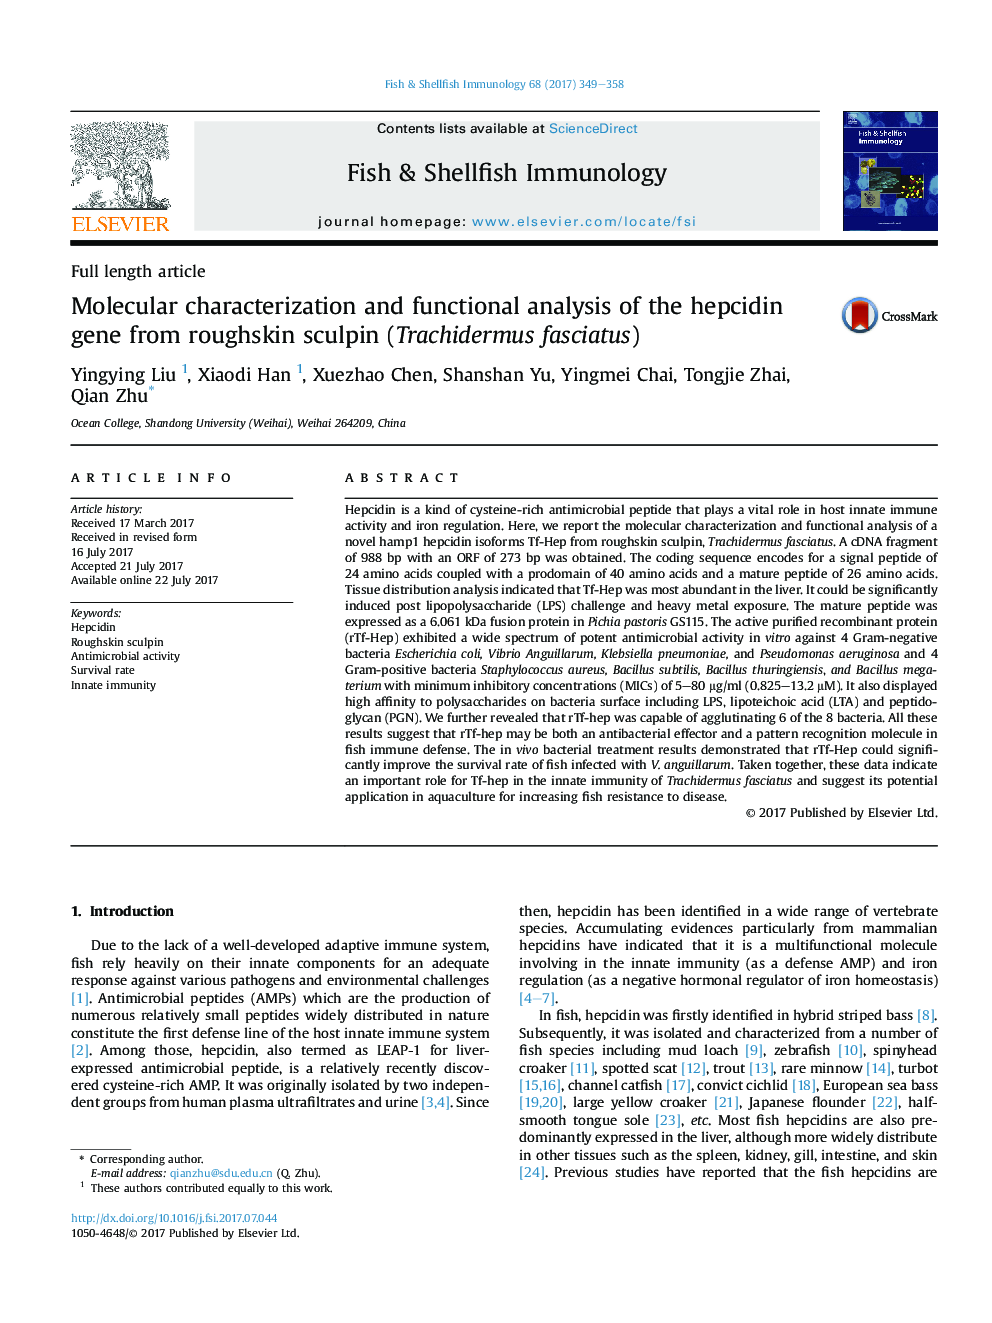 Full length articleMolecular characterization and functional analysis of the hepcidin gene from roughskin sculpin (Trachidermus fasciatus)